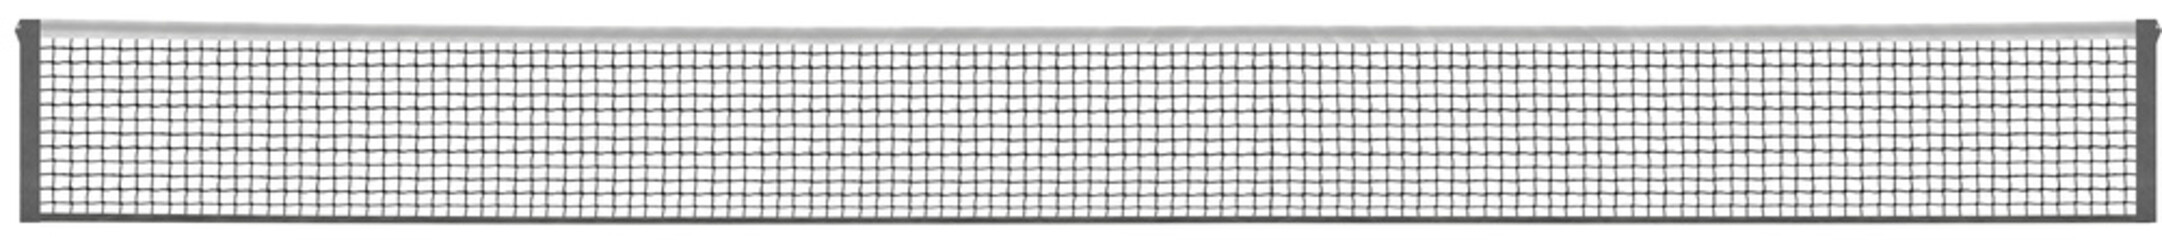 Composite image of a tennis net